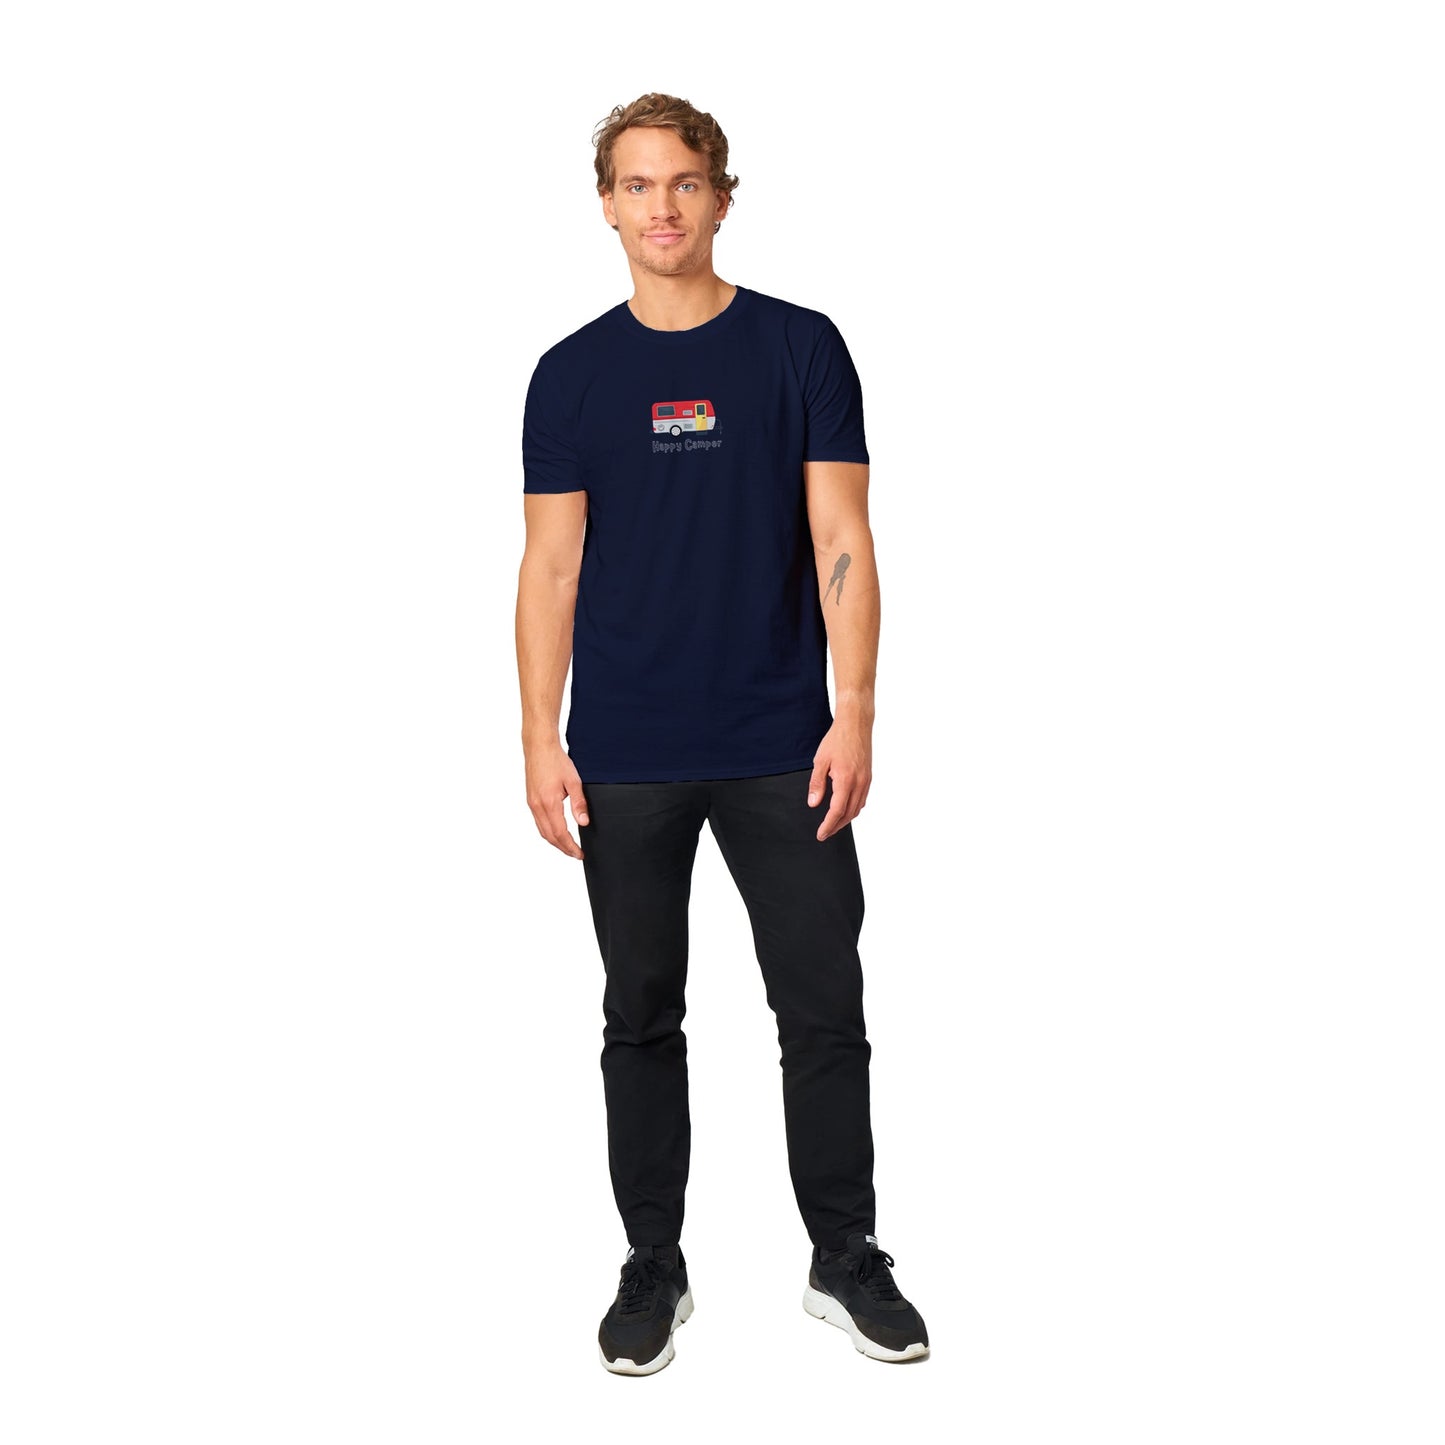 The Happy Camper Classic Unisex T-shirt